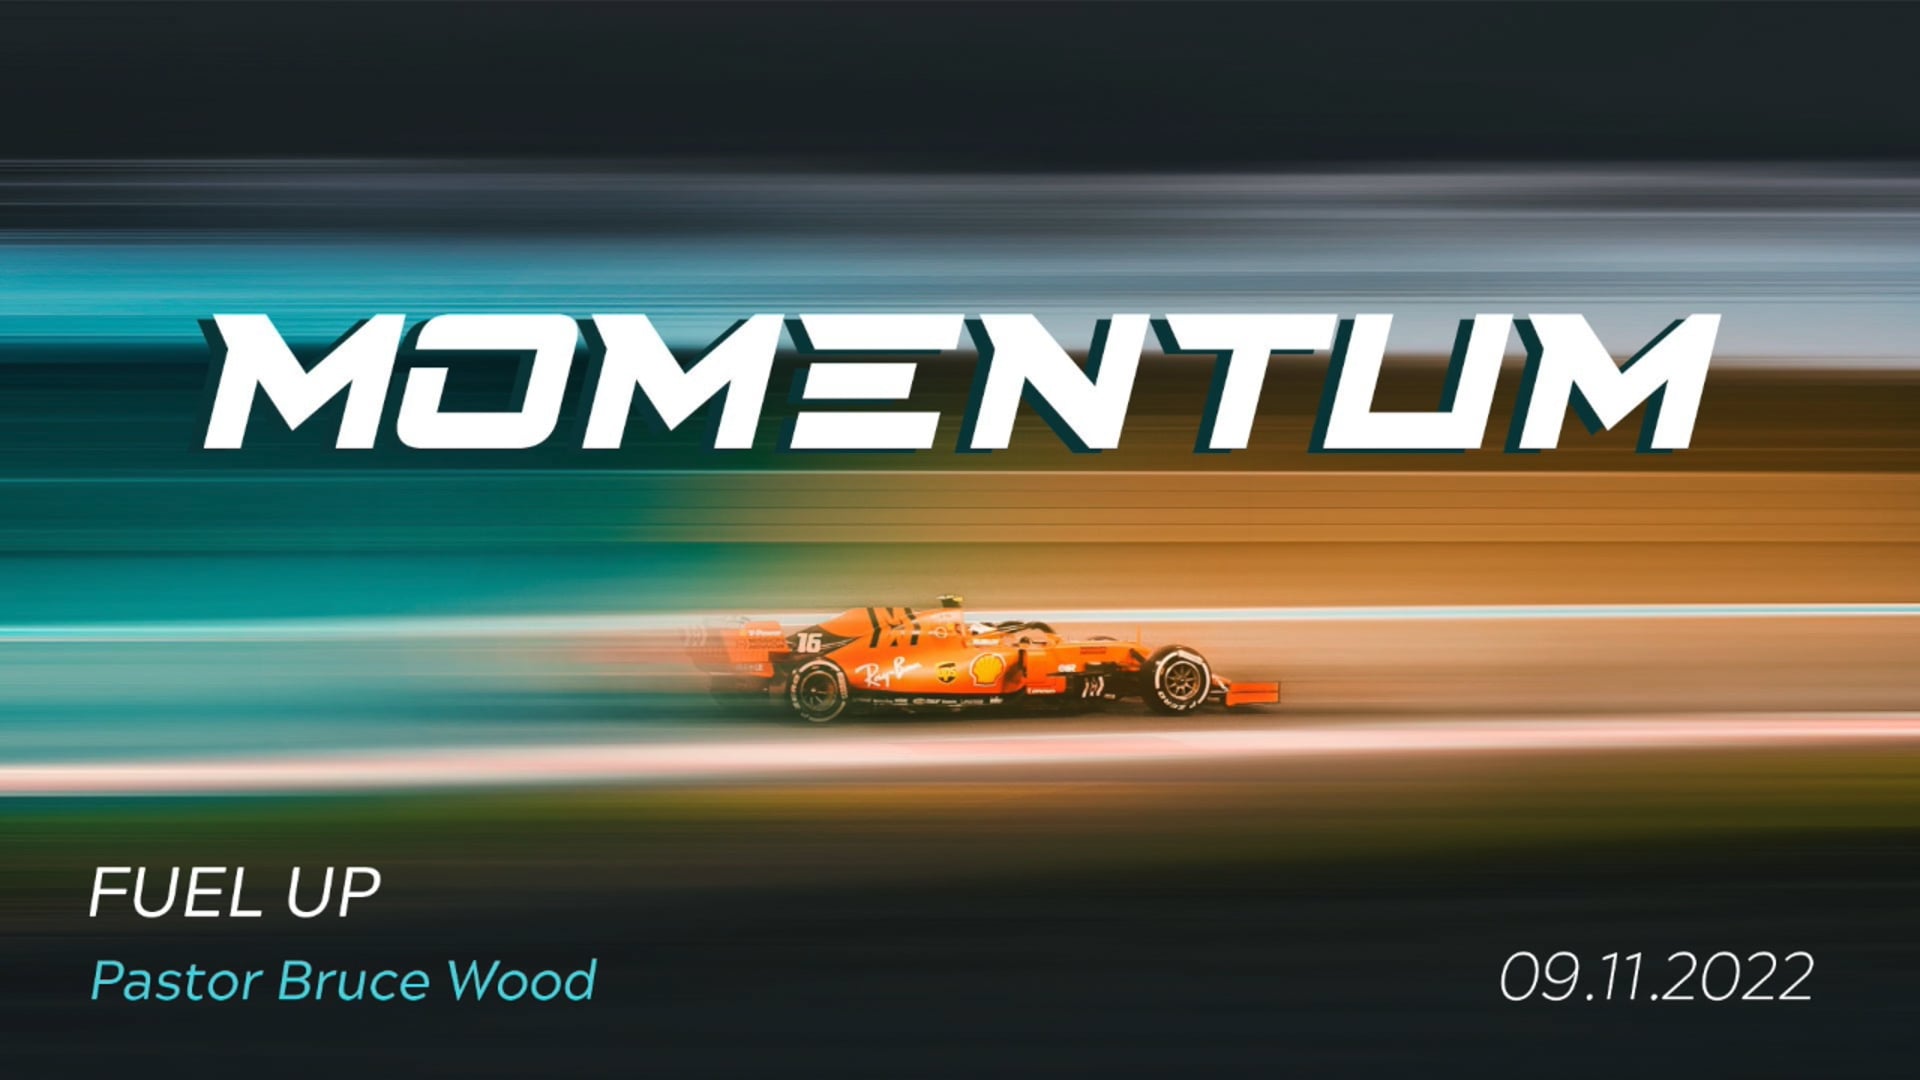 Momentum - Part 5: Fuel Up